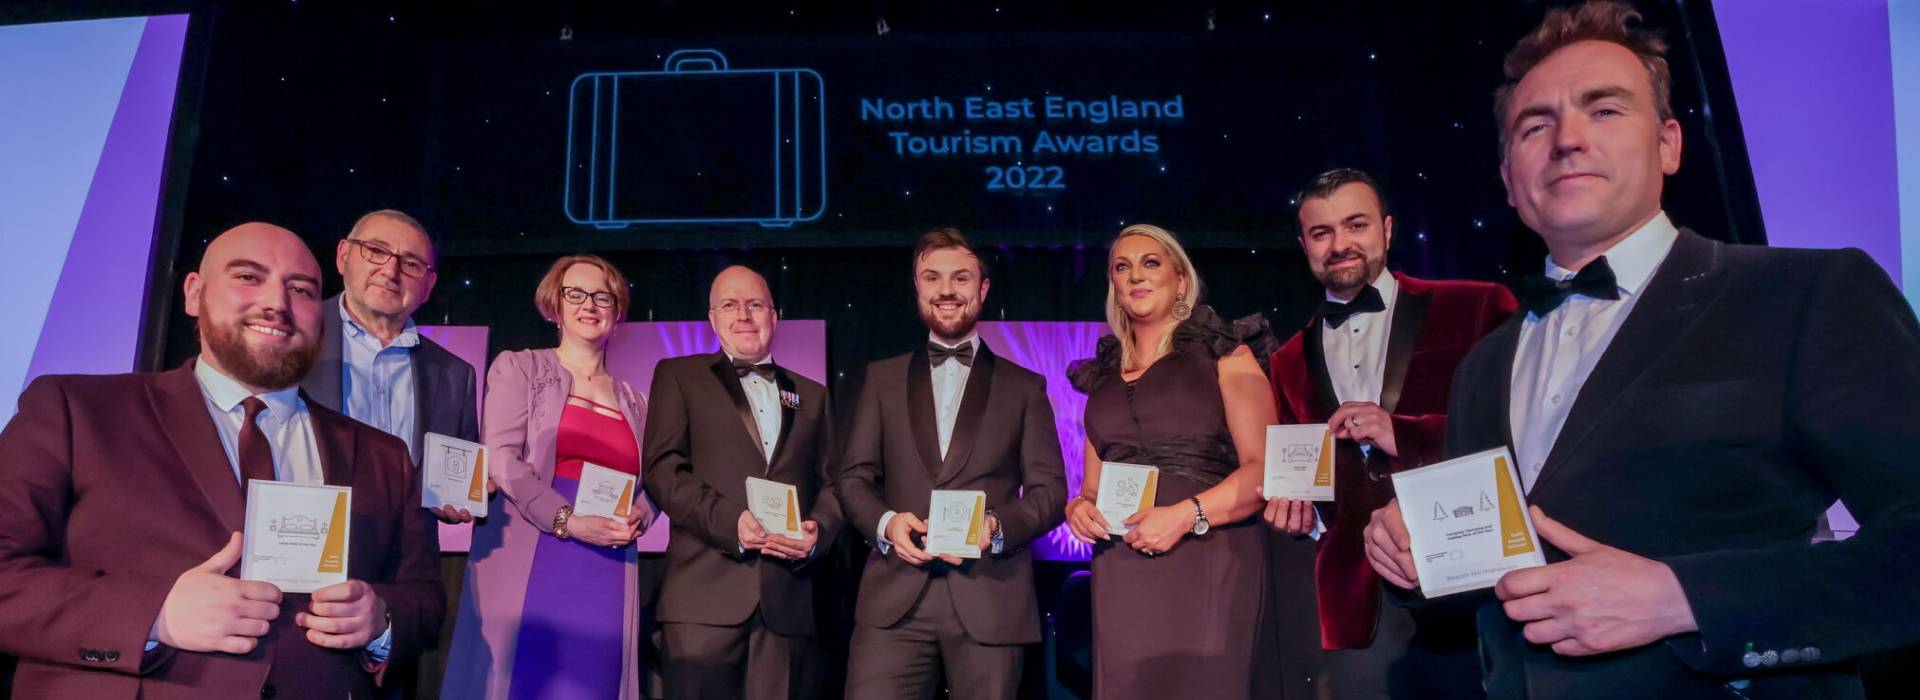 Award winner at North East Tourism Awards 2022